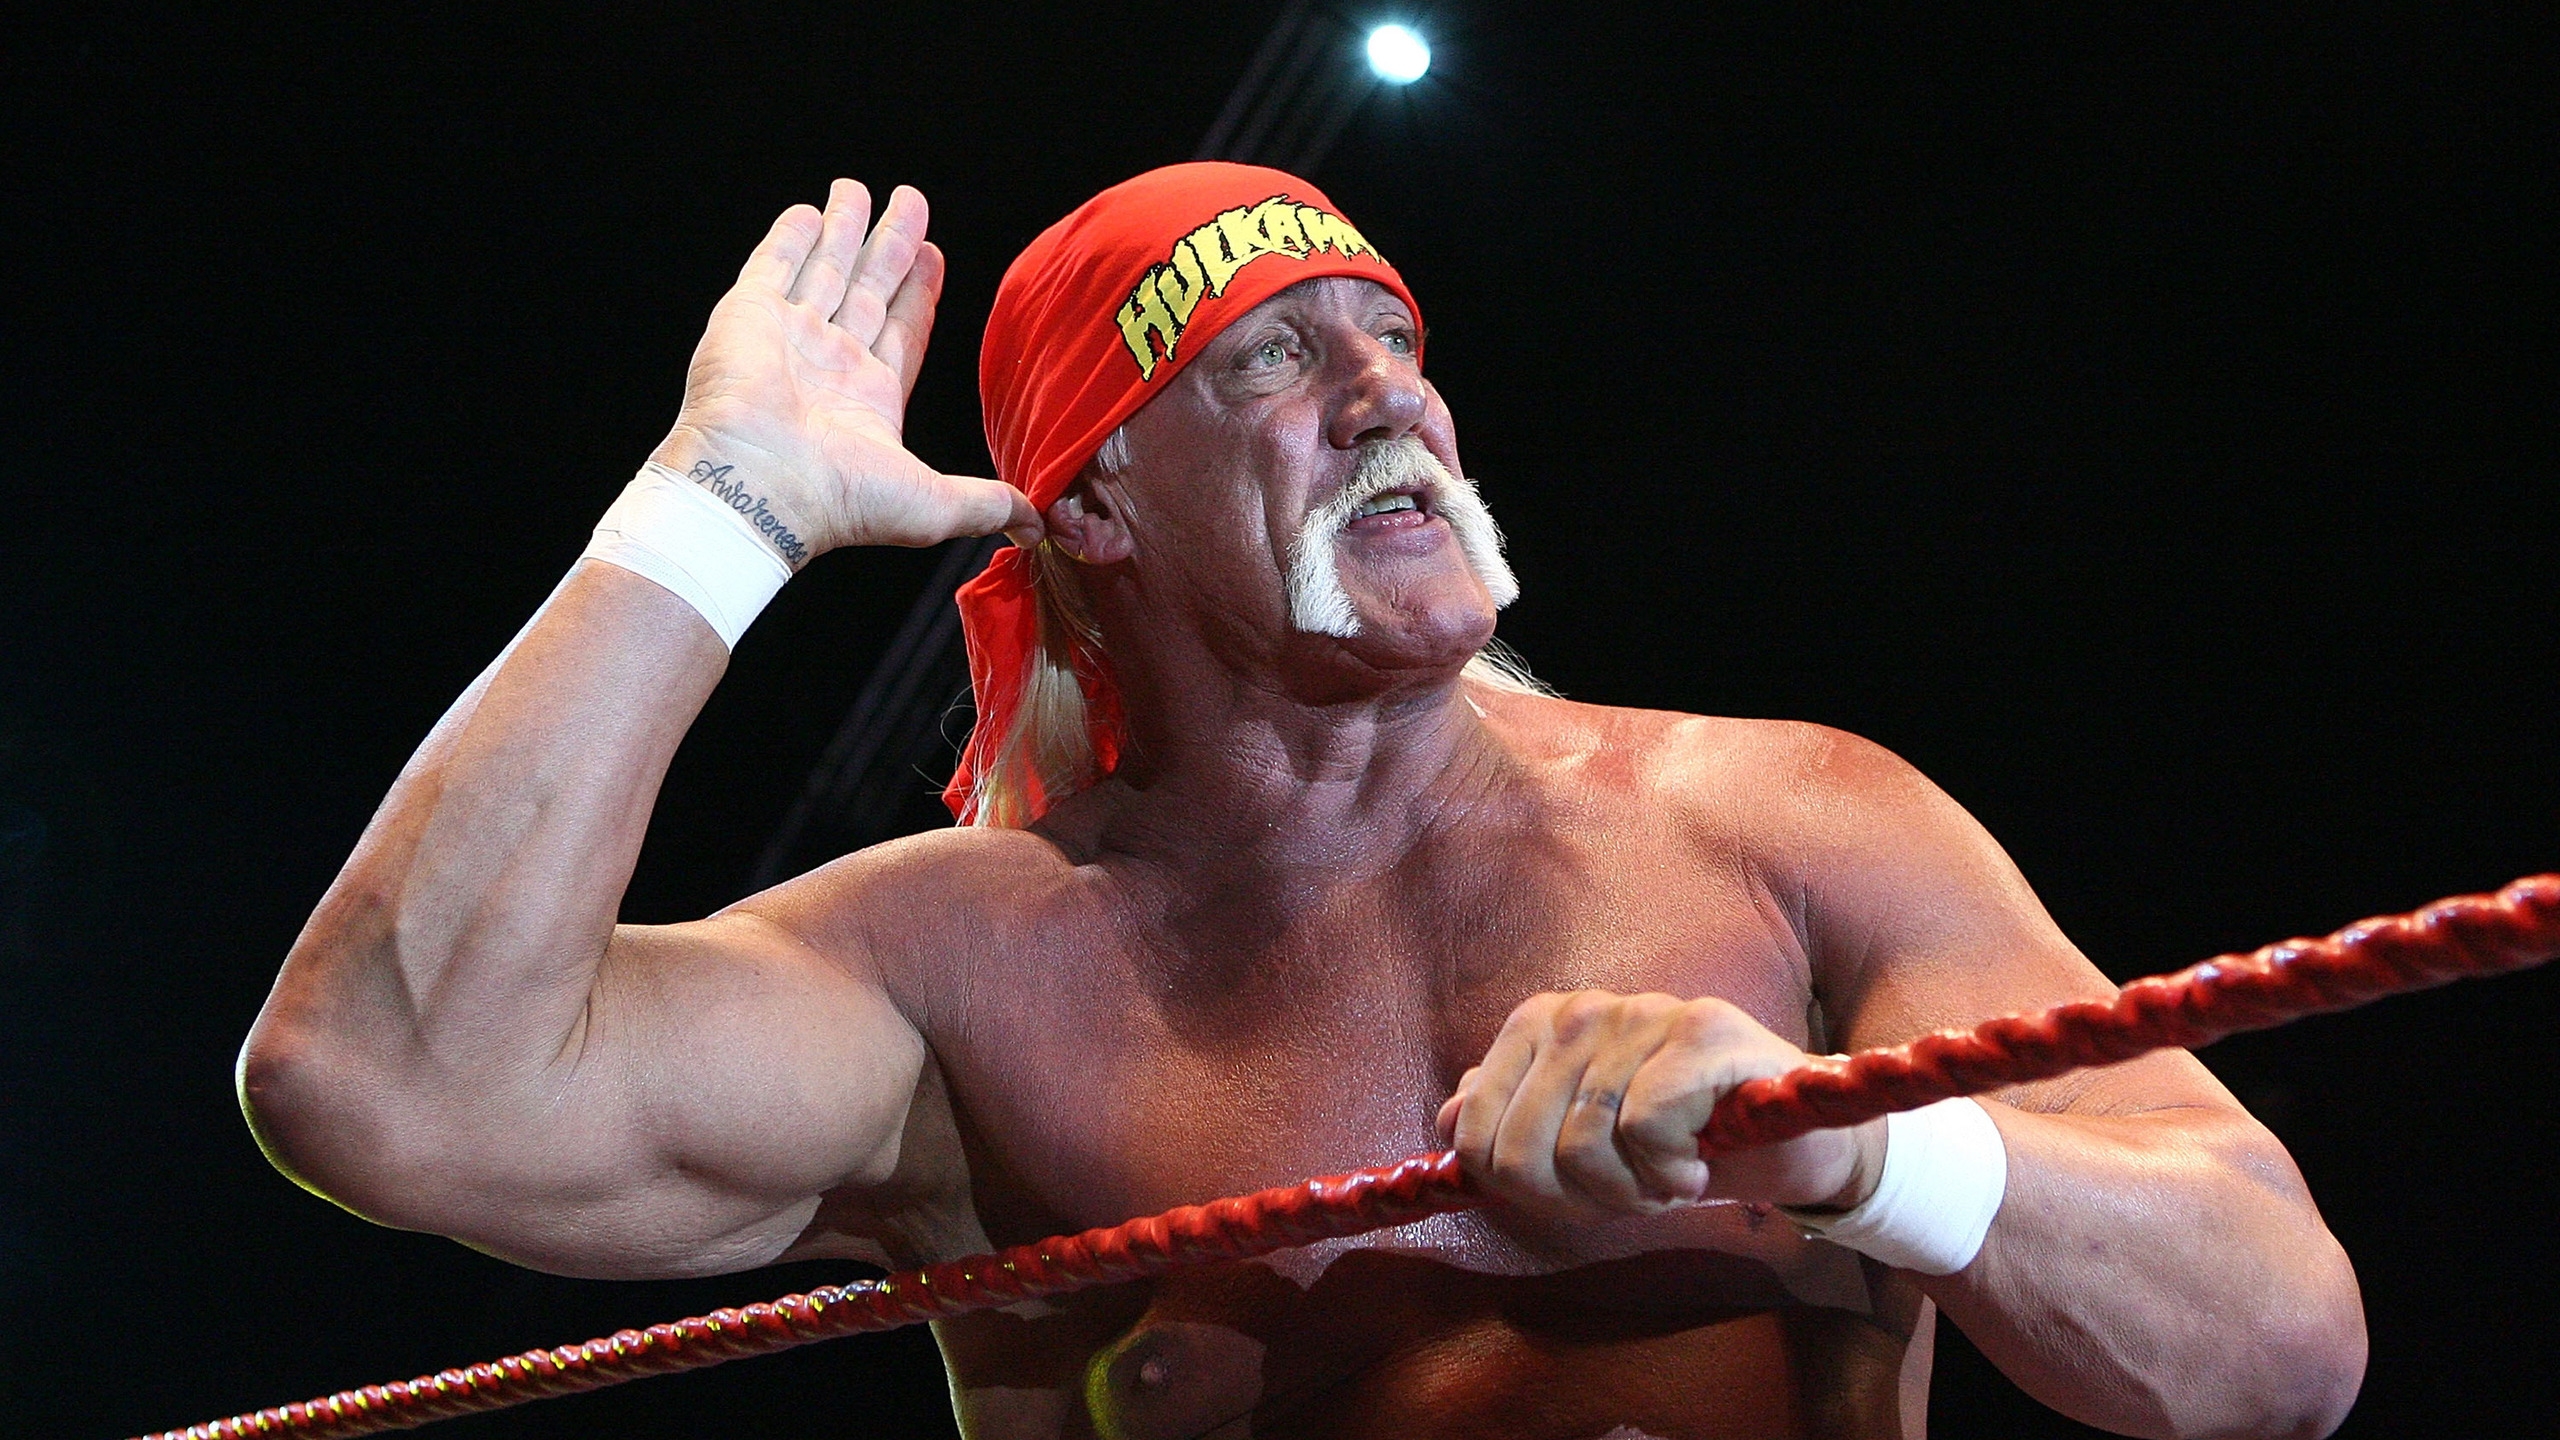 Hulk Hogan Salute for 2560x1440 HDTV resolution